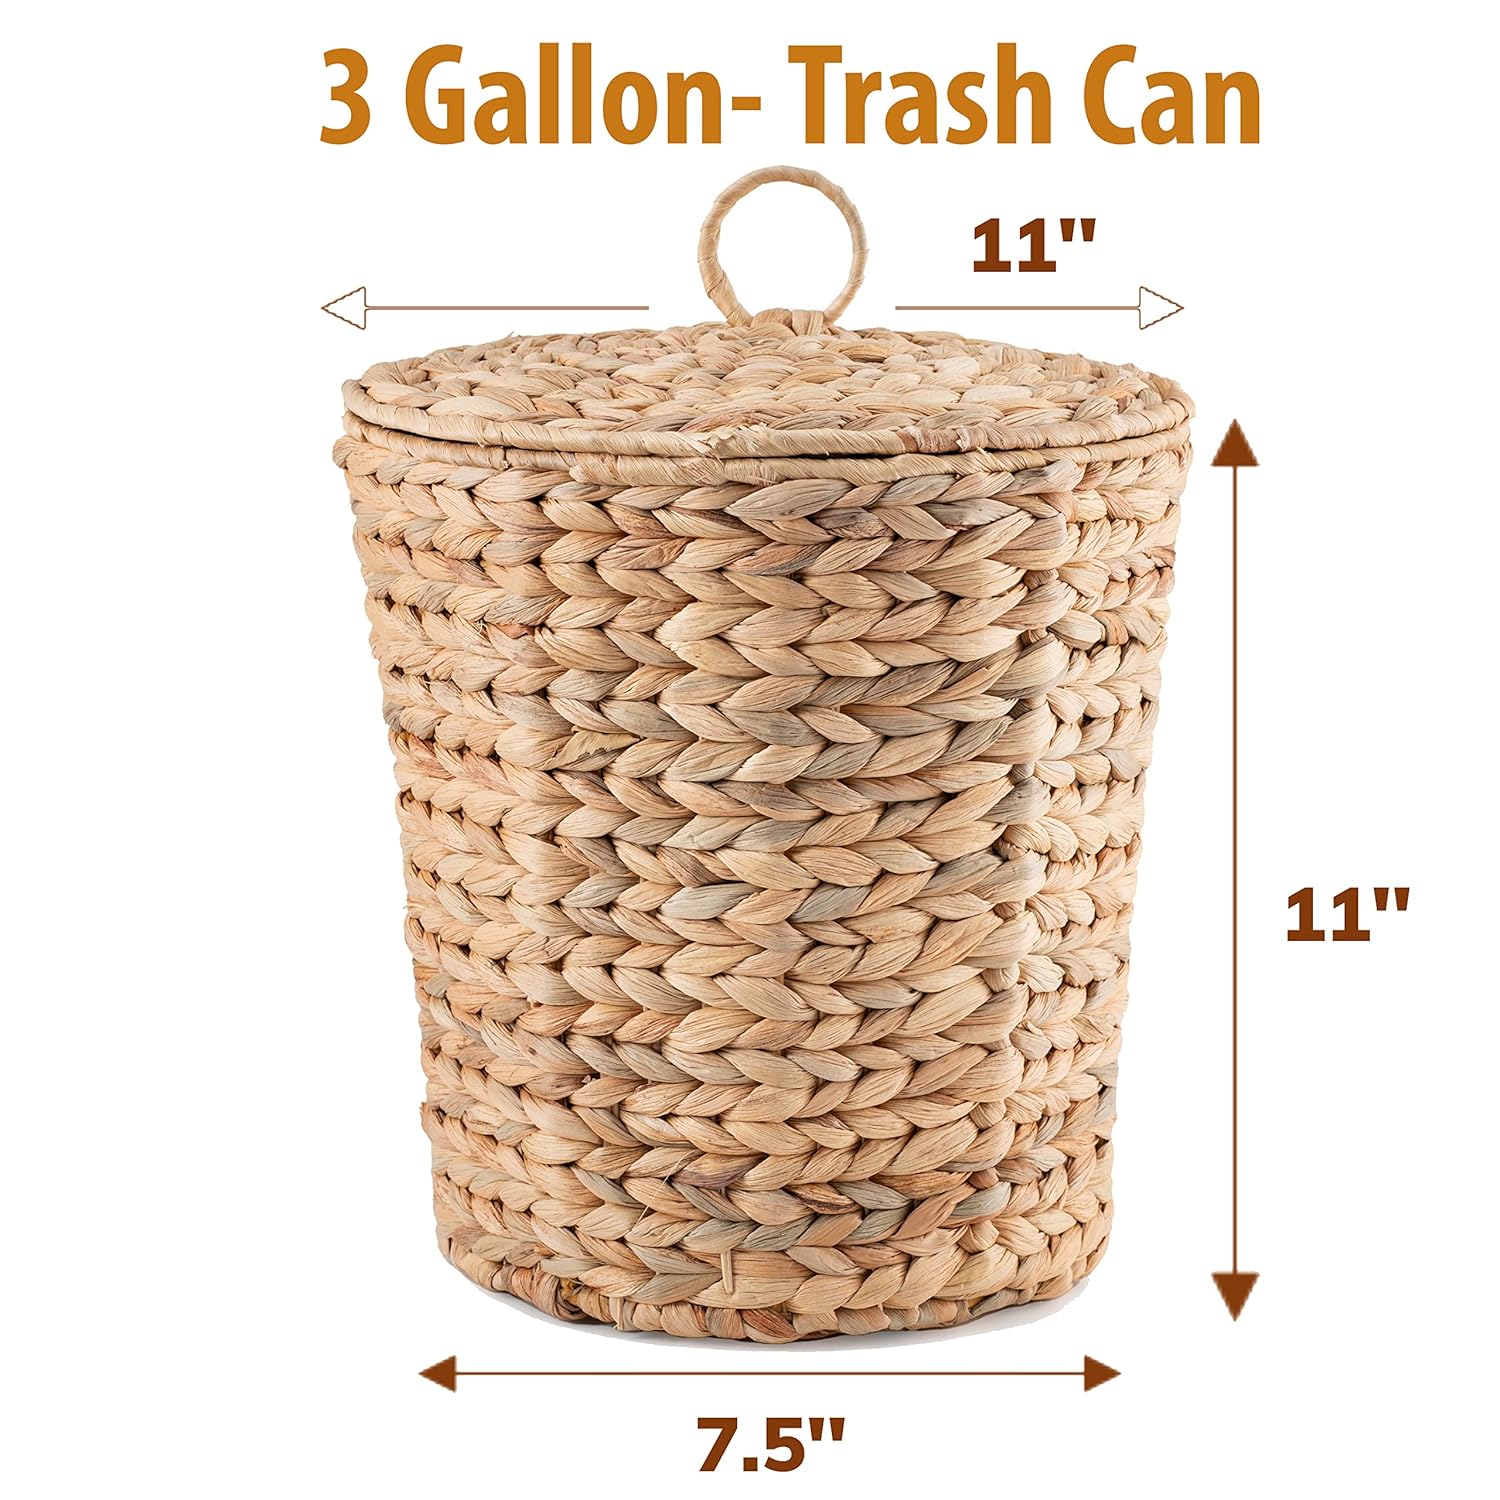 KOLWOVEN Wicker Trash Can with Lid in Bedroom, Bathroom - 3 Gallon